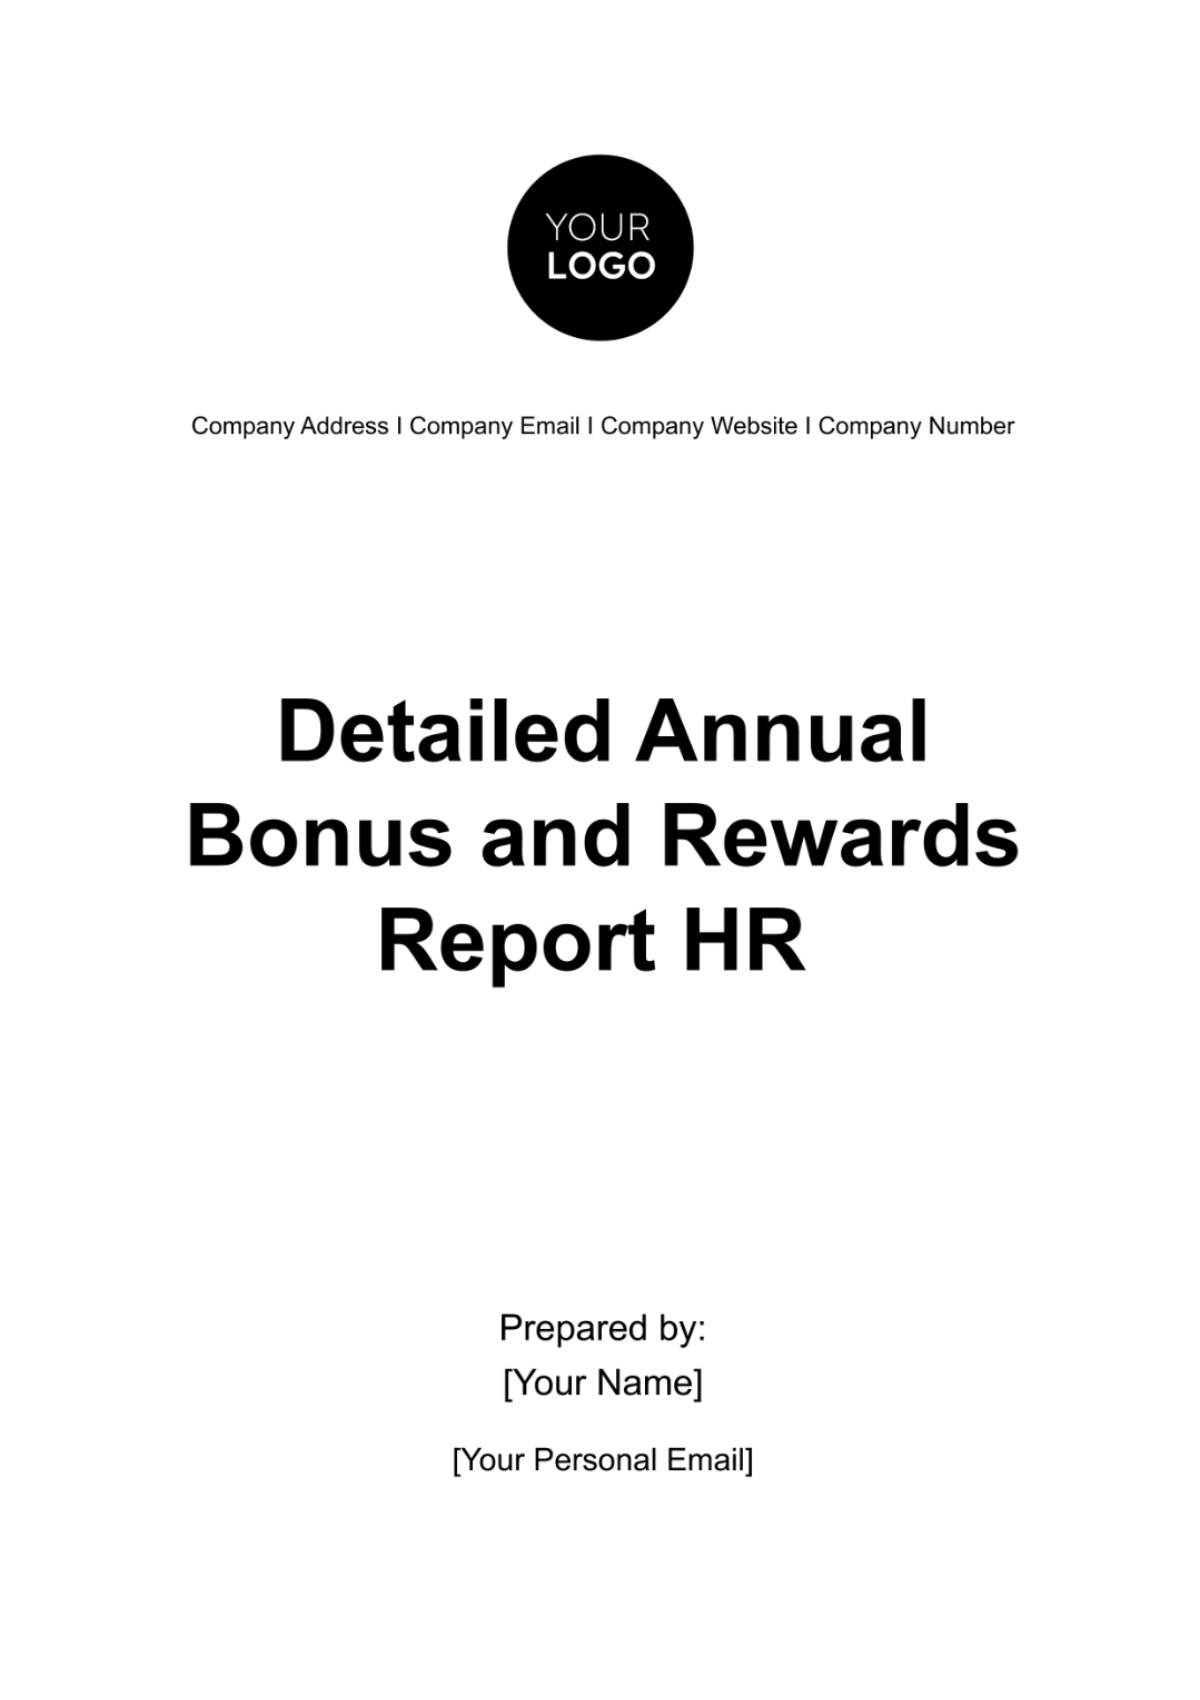 Detailed Annual Bonus and Rewards Report HR Template